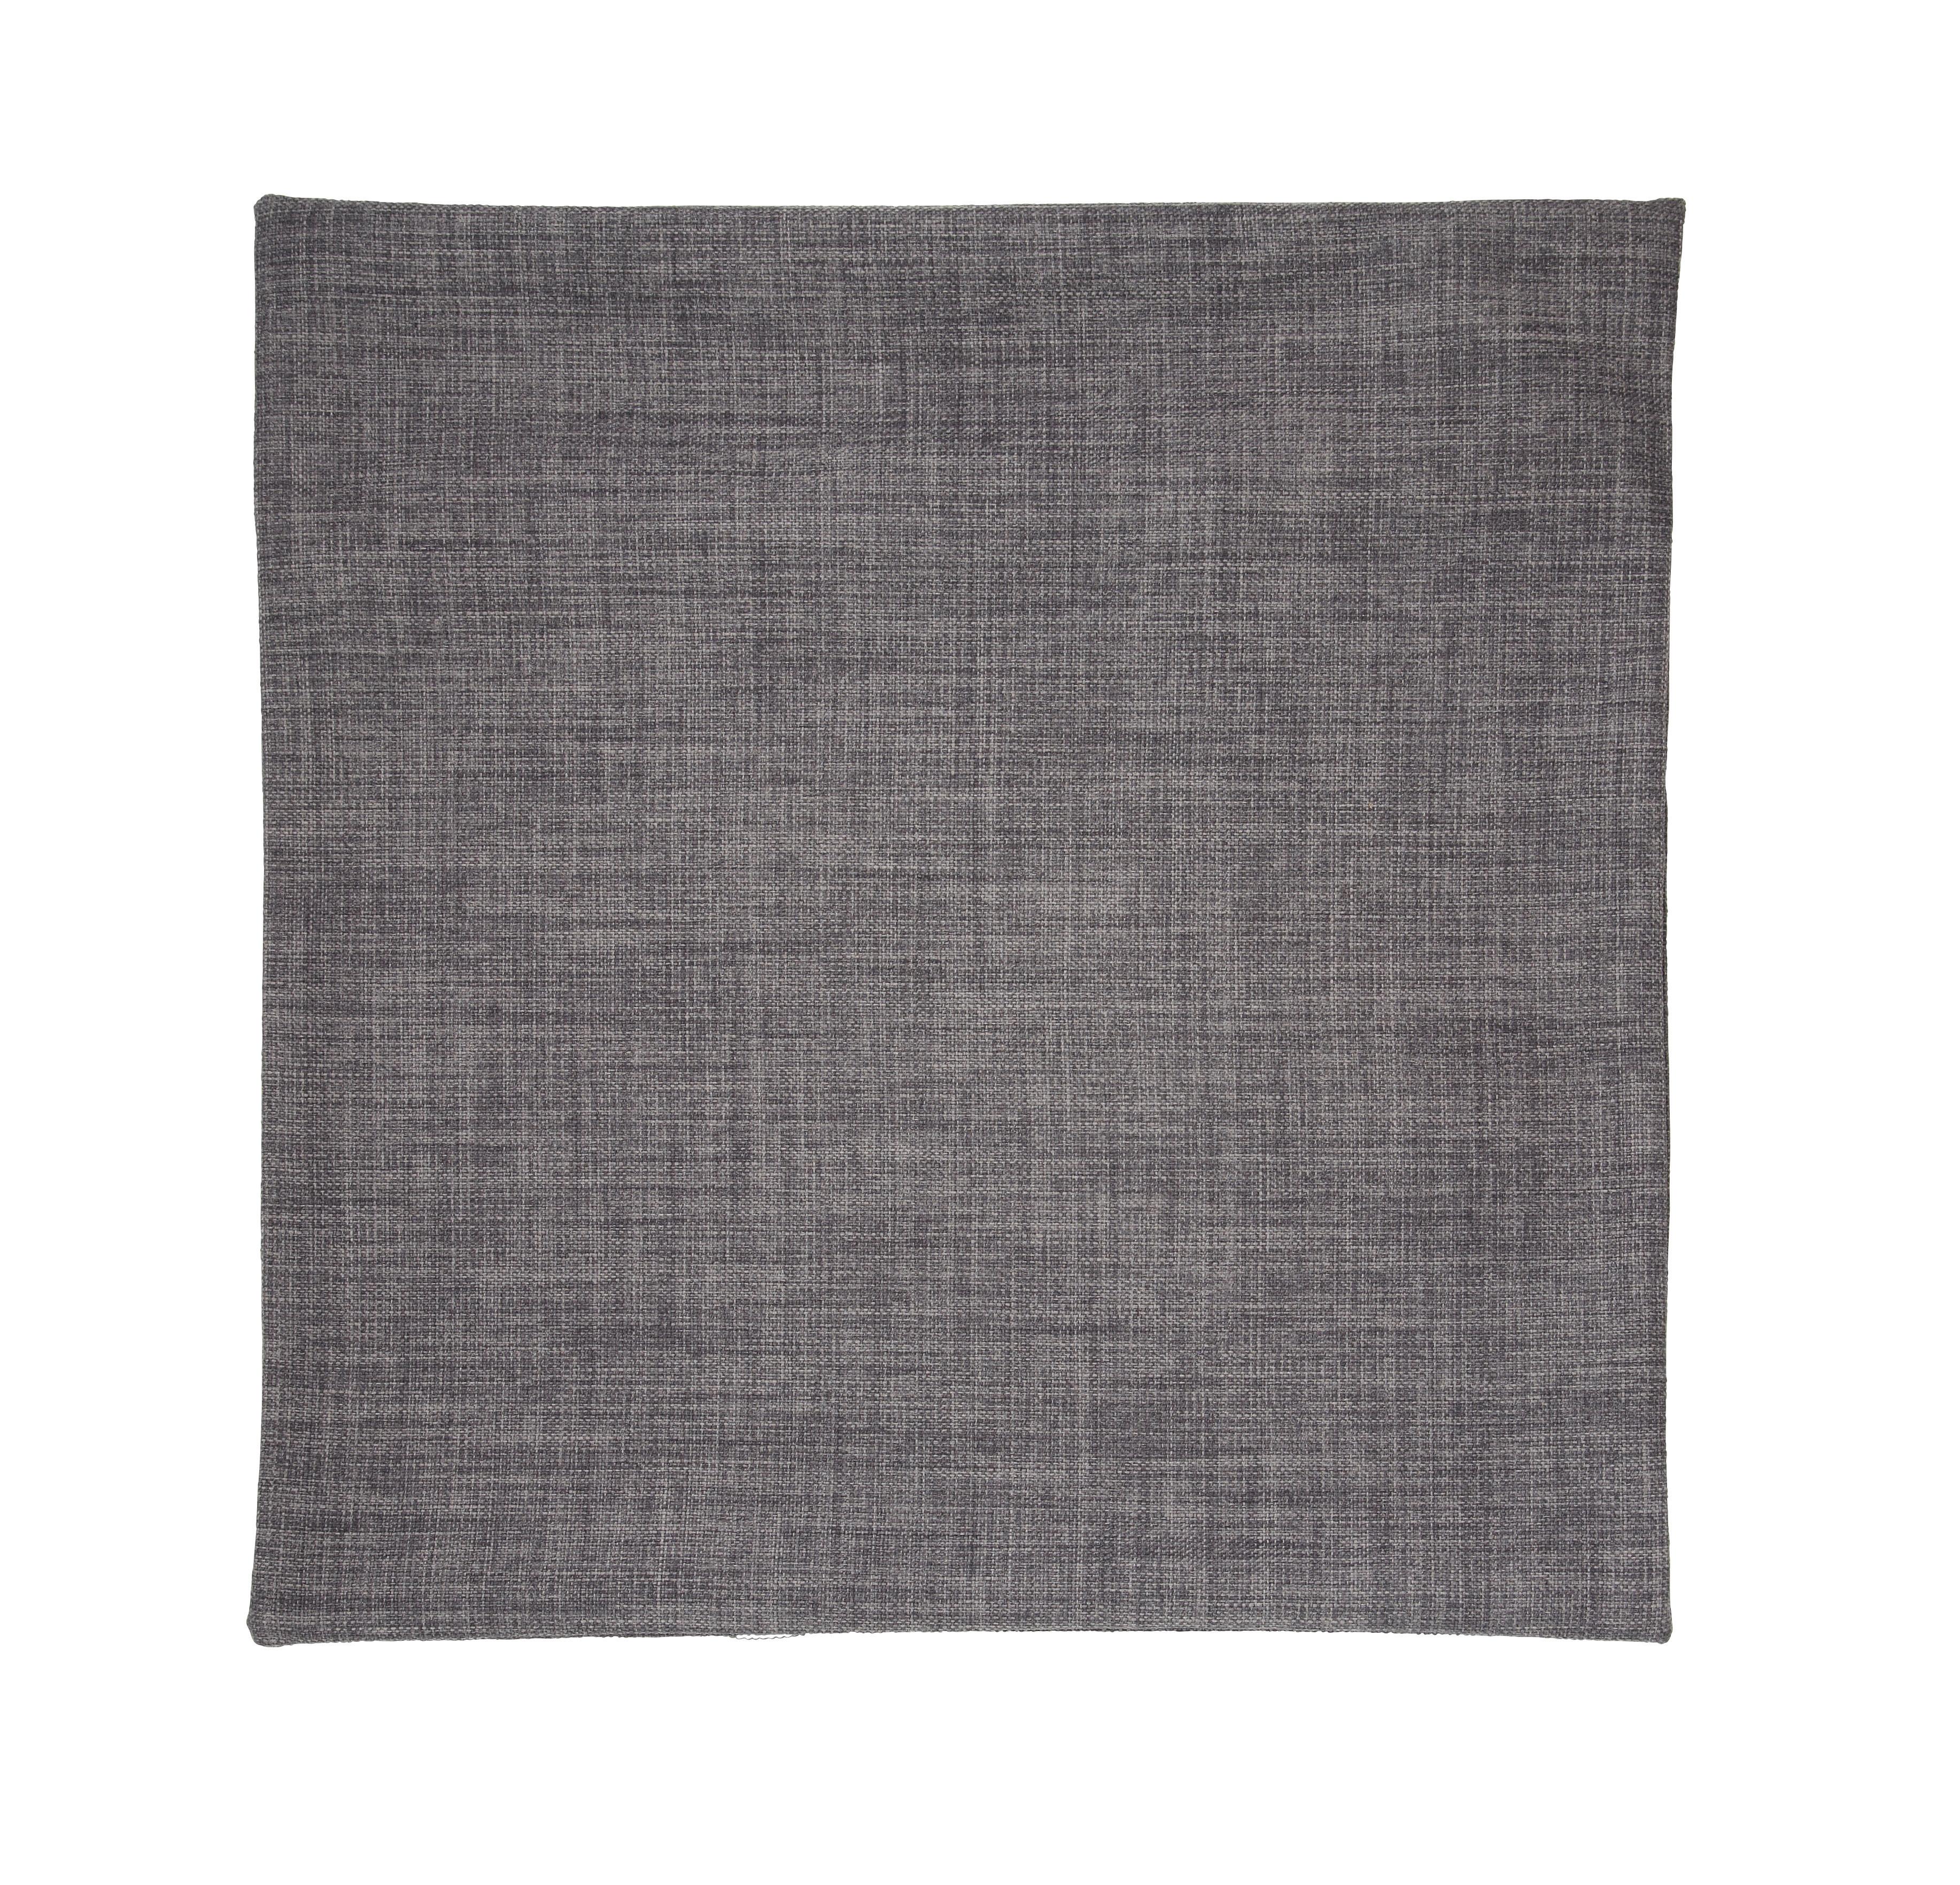 Kissenhülle Leinenoptik, ca. 50x50cm - Grau, Konventionell, Textil (50/50cm) - Modern Living